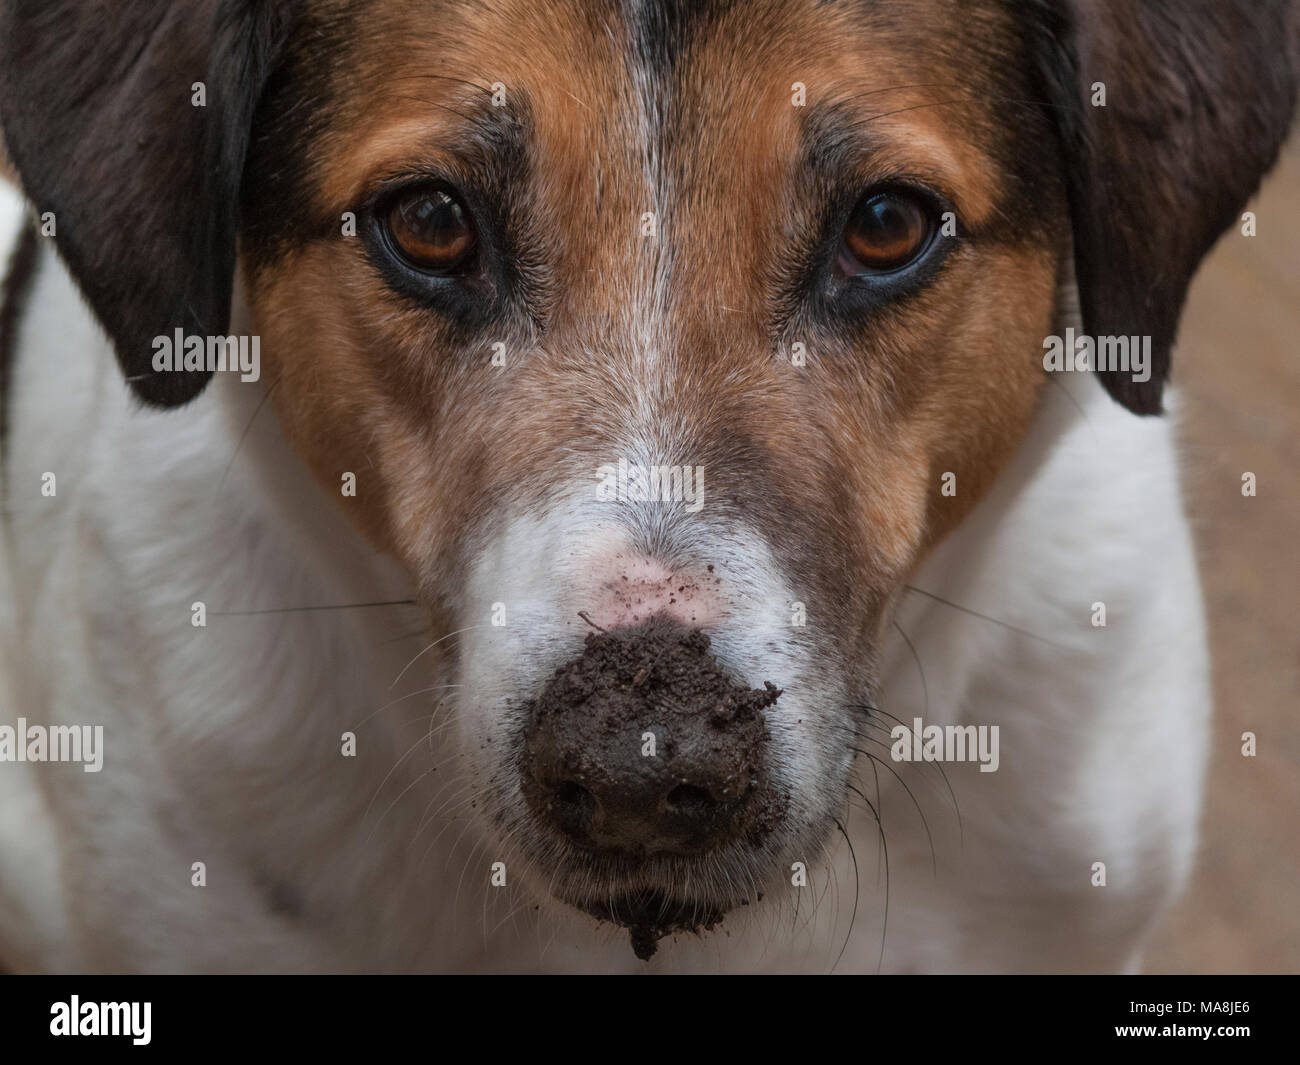 Dog with muddy nose Stock Photo